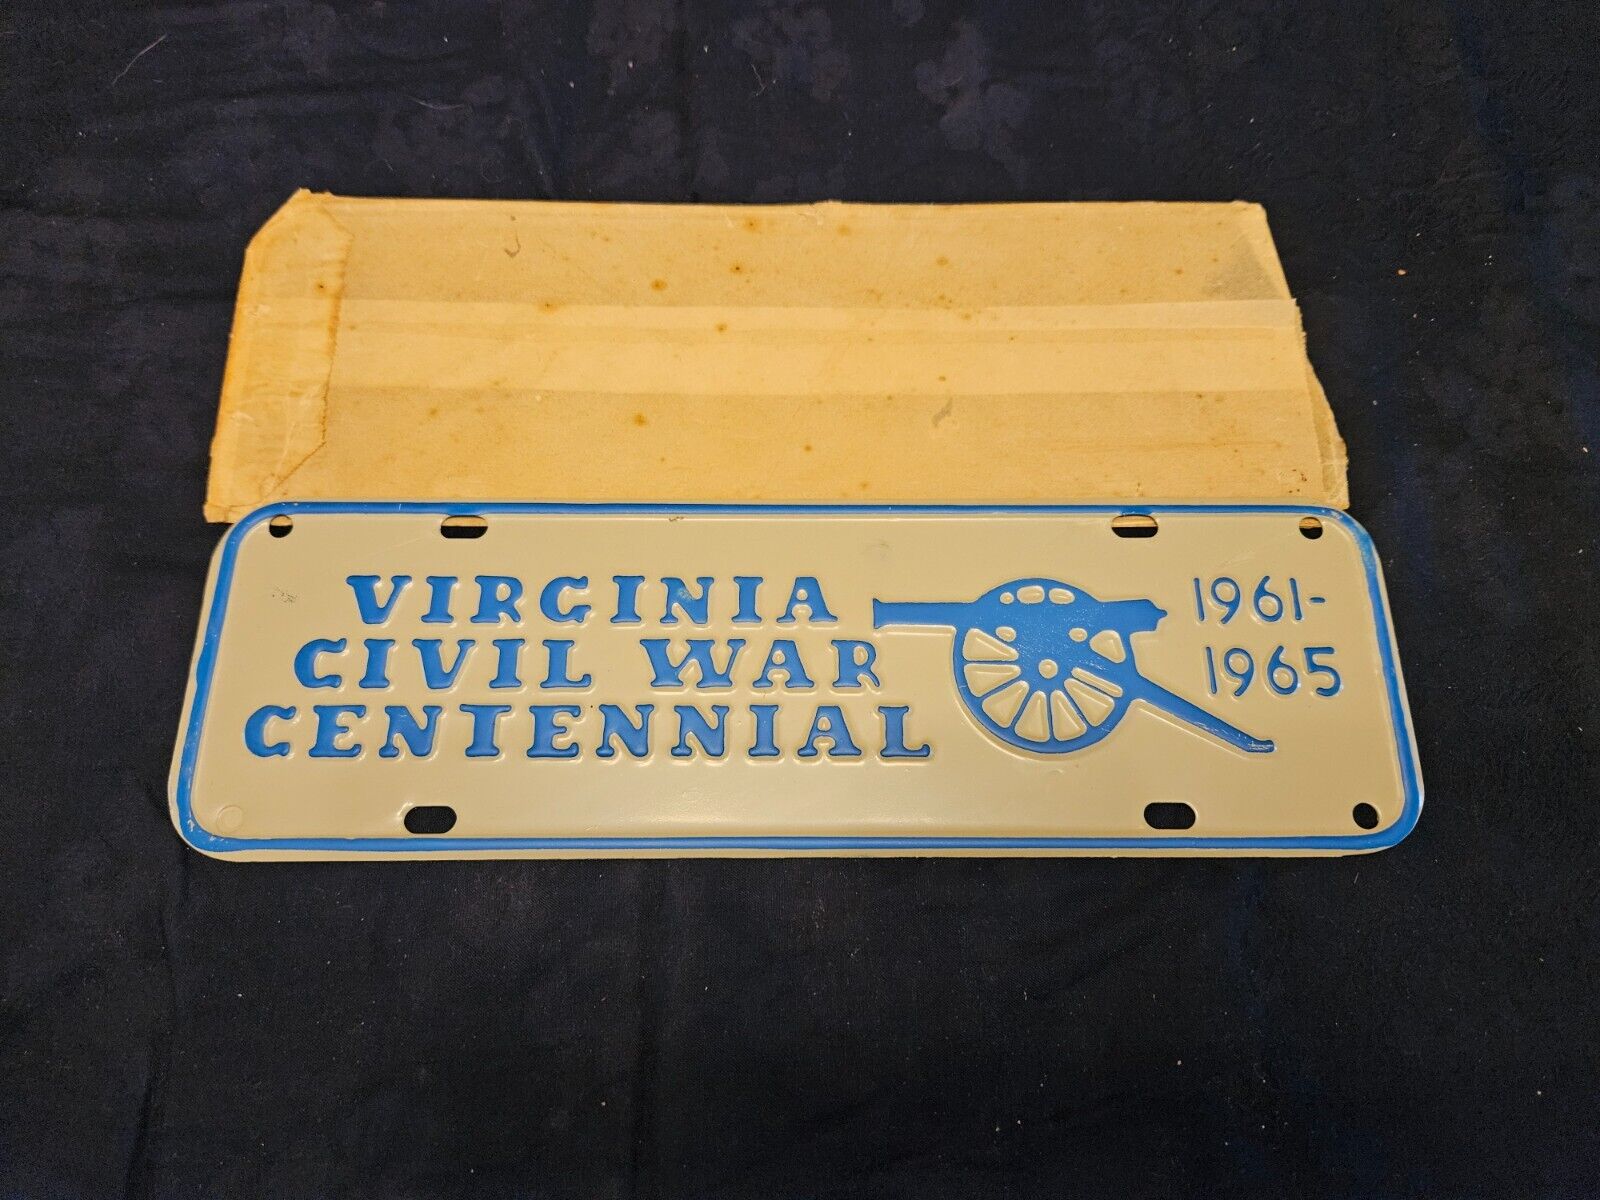 1961-1965 Virginia Civil War Centennial License Plate Attachment Mint in Wrapper